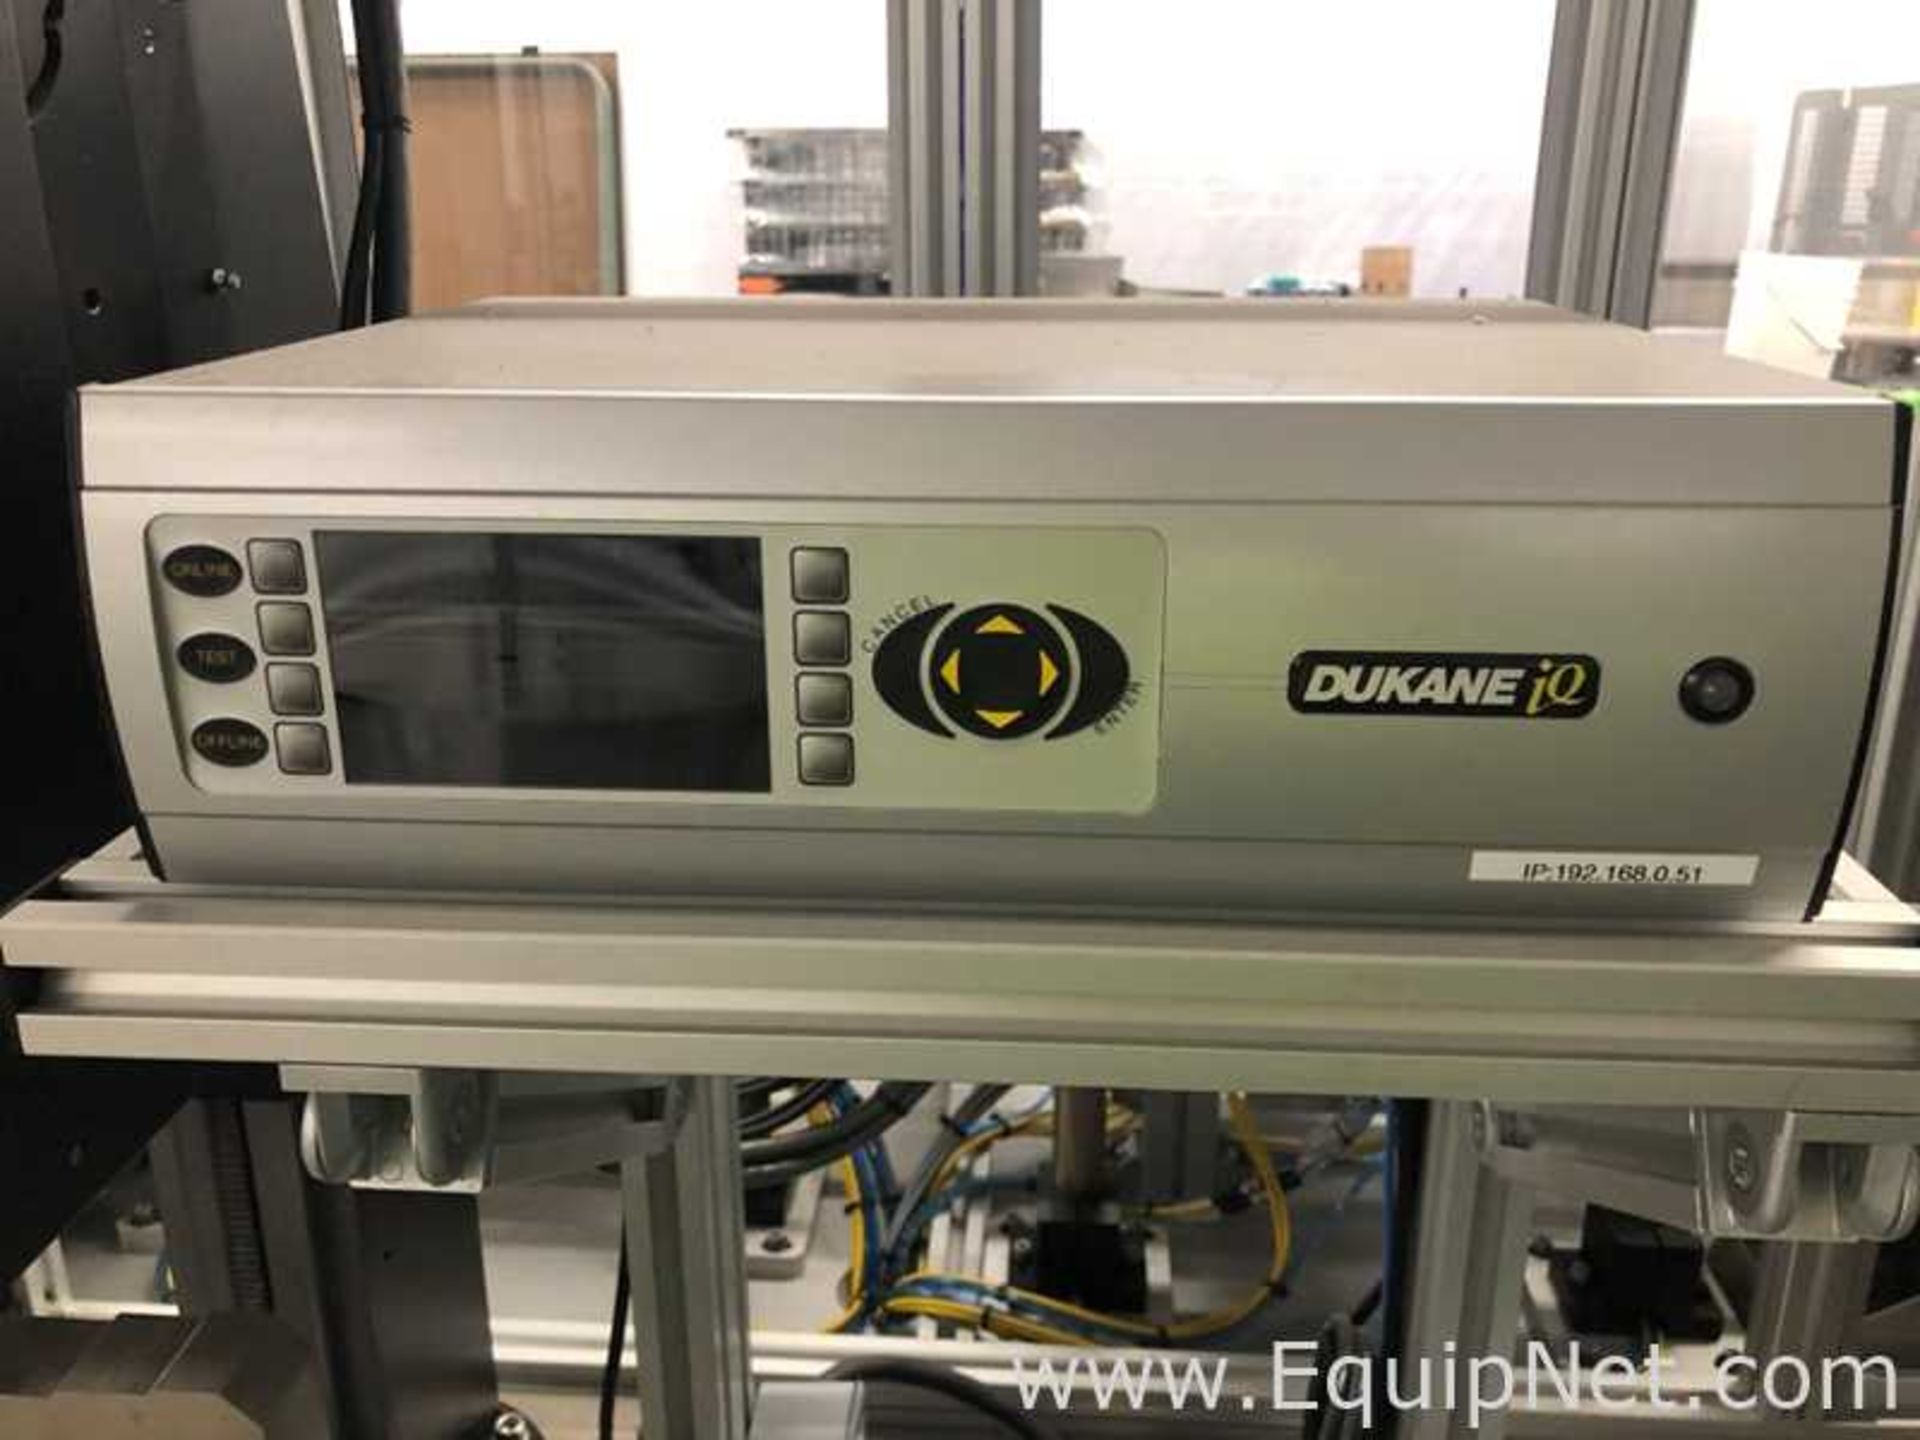 Two Dukane iQ Sevo Ultrasonic Welding Units And Controllers - Image 3 of 16